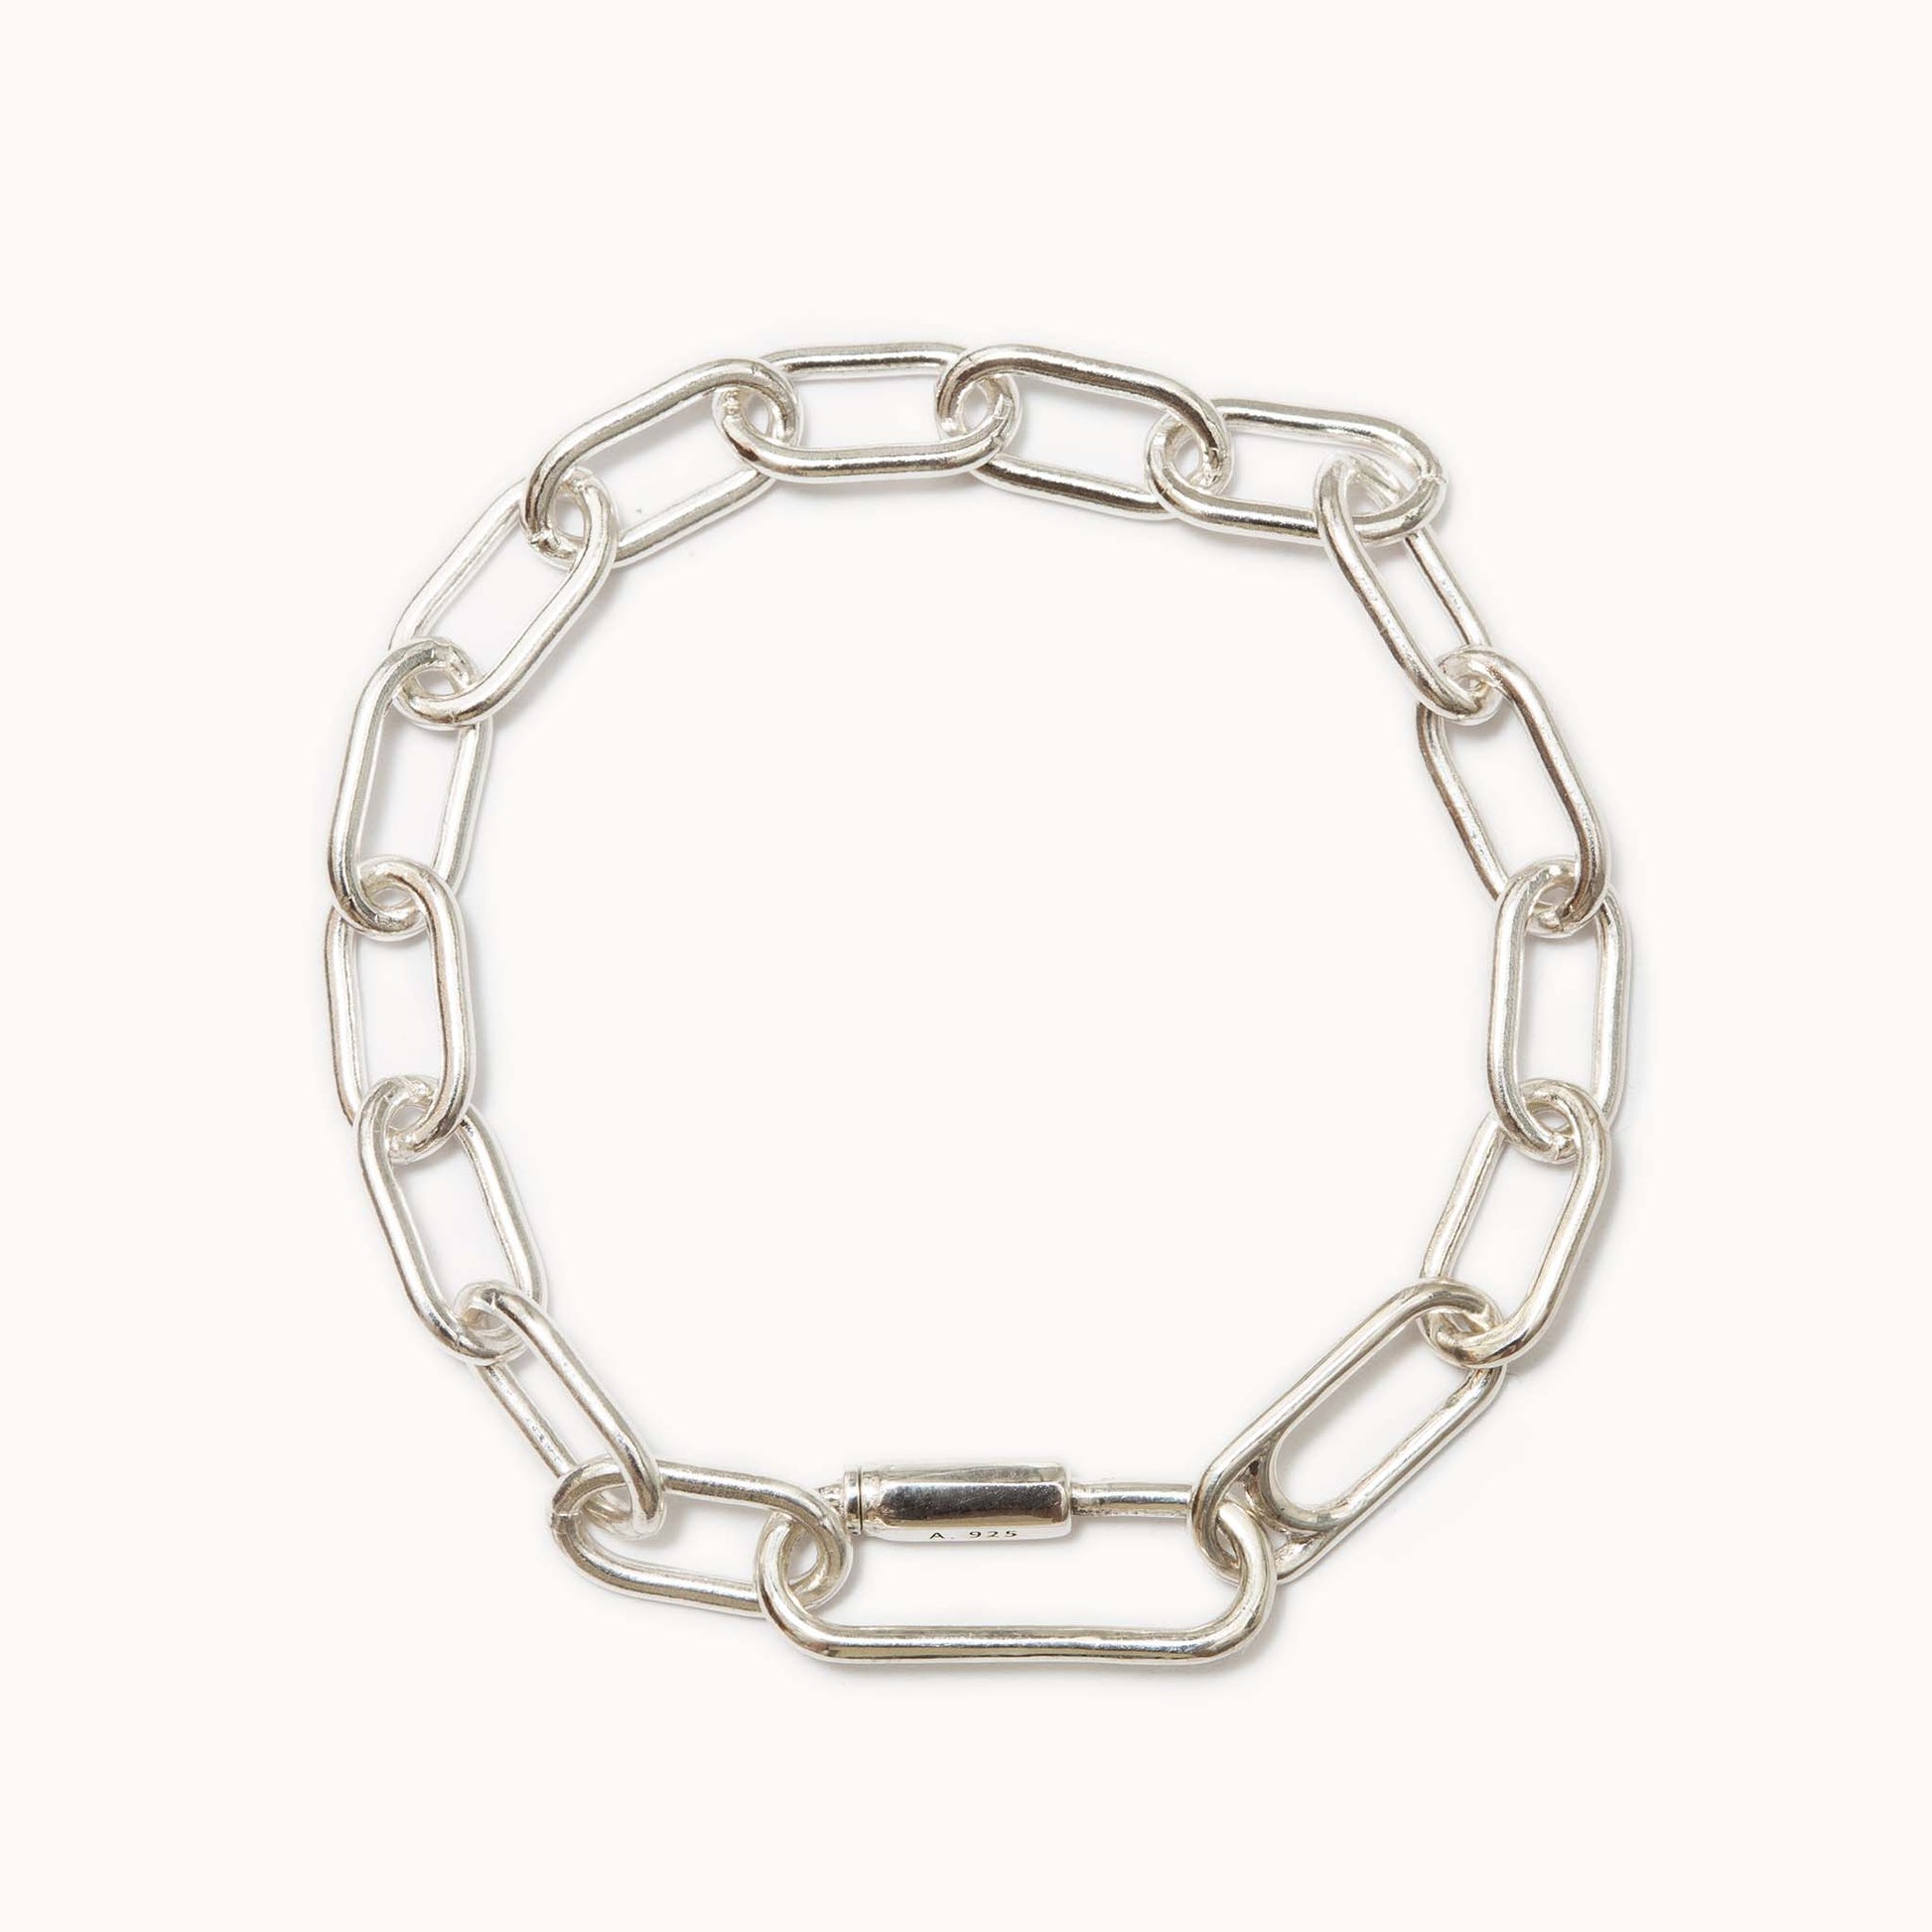 Chain Bracelet with Karabiner | 1706B281010